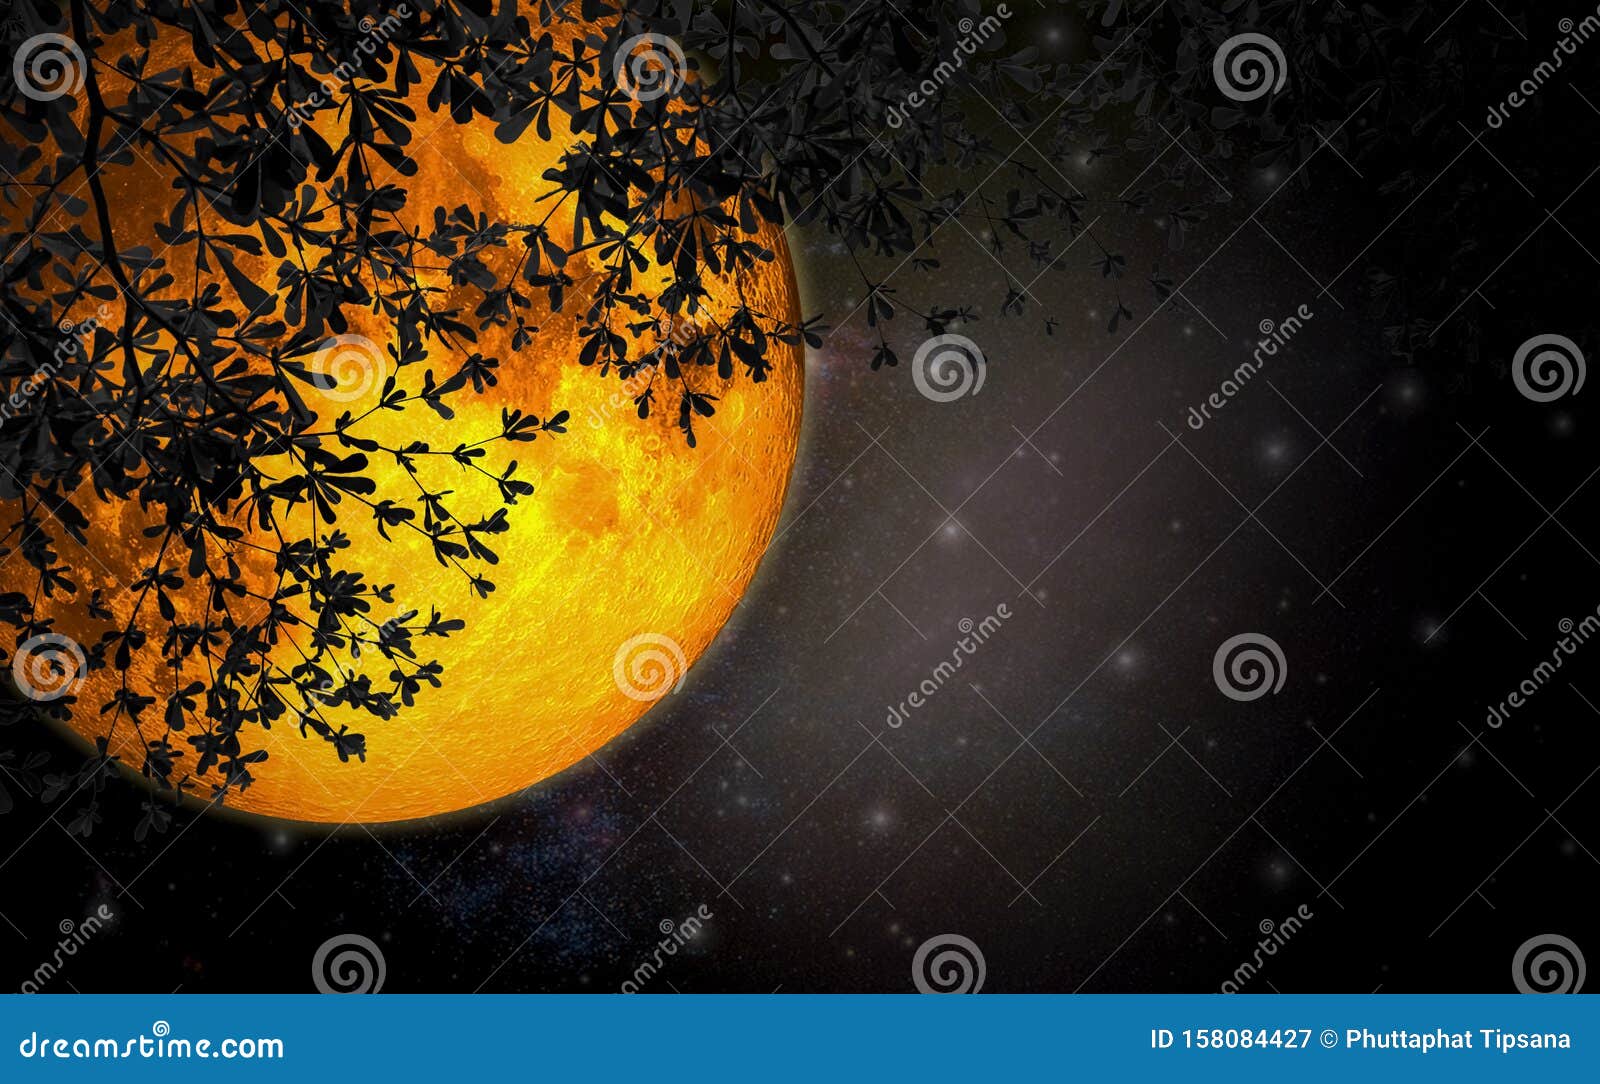 Romantic Night Sky With Large Moon Orange Color Beautiful Sprawling